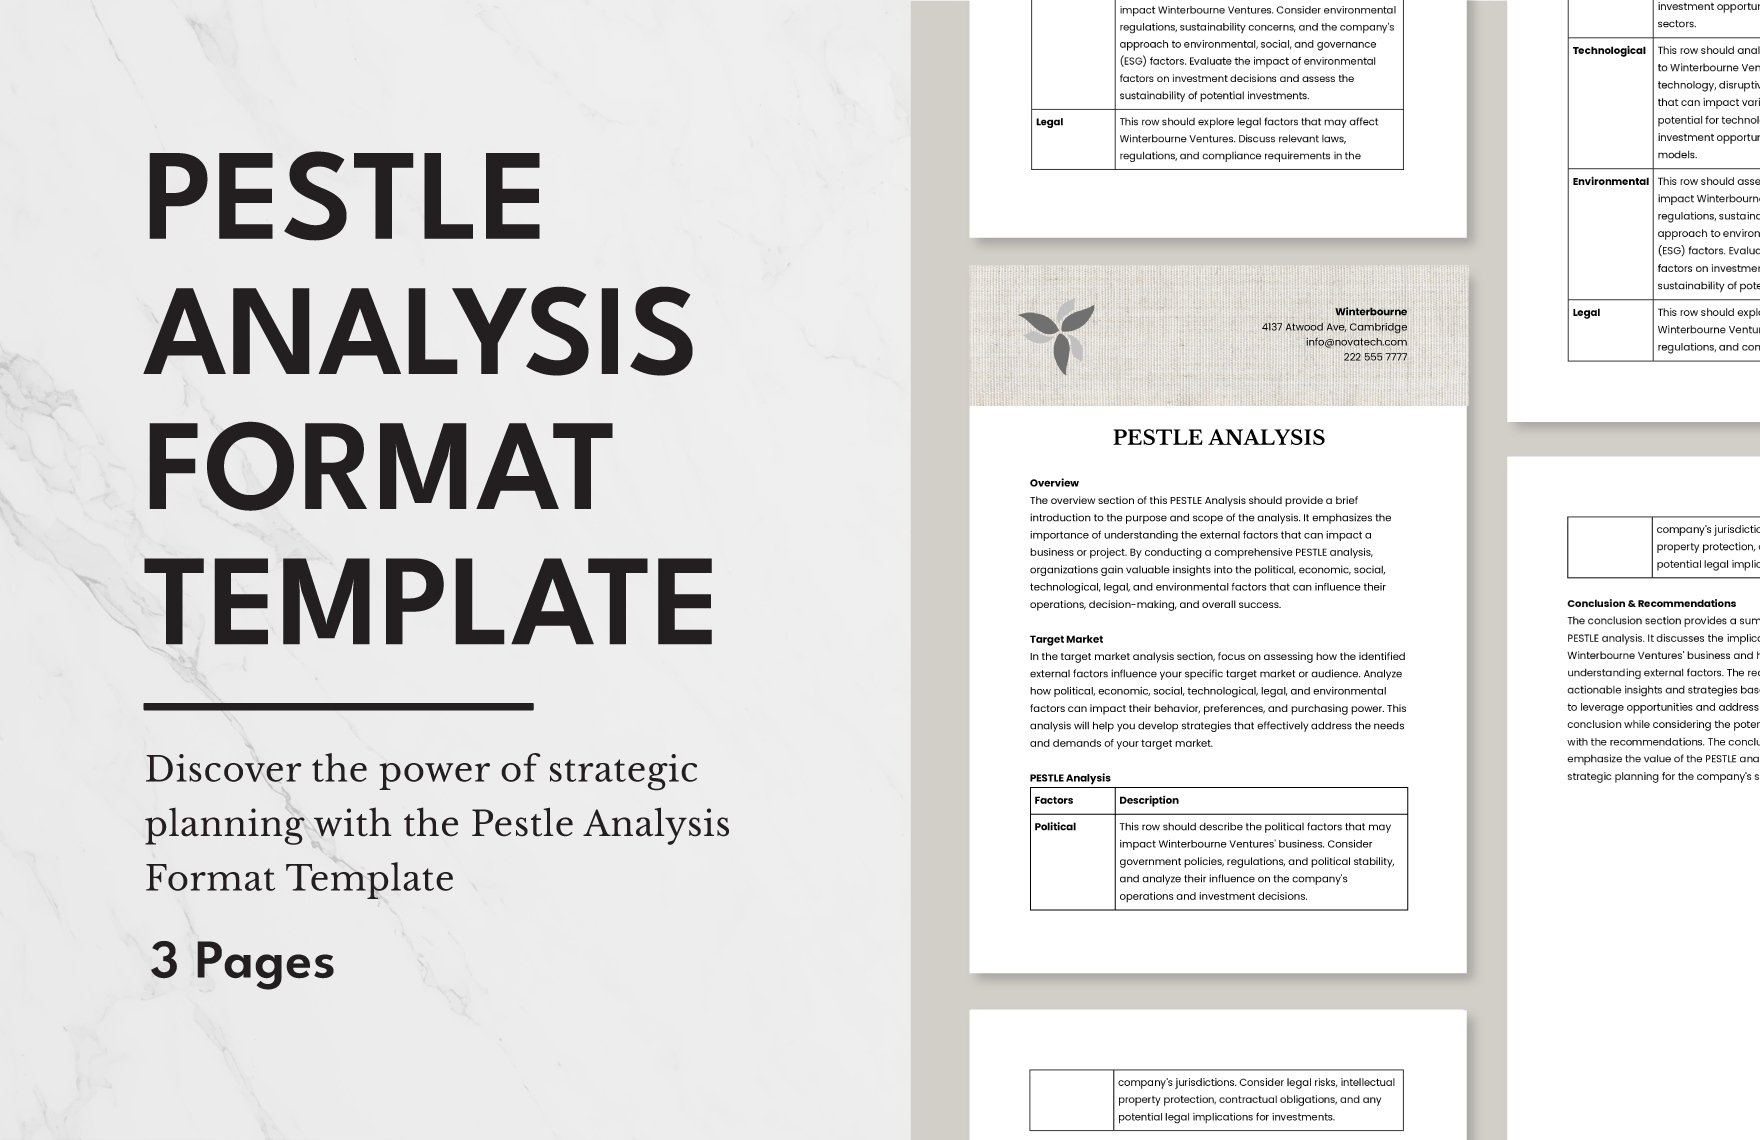 Pestle Analysis Format Template